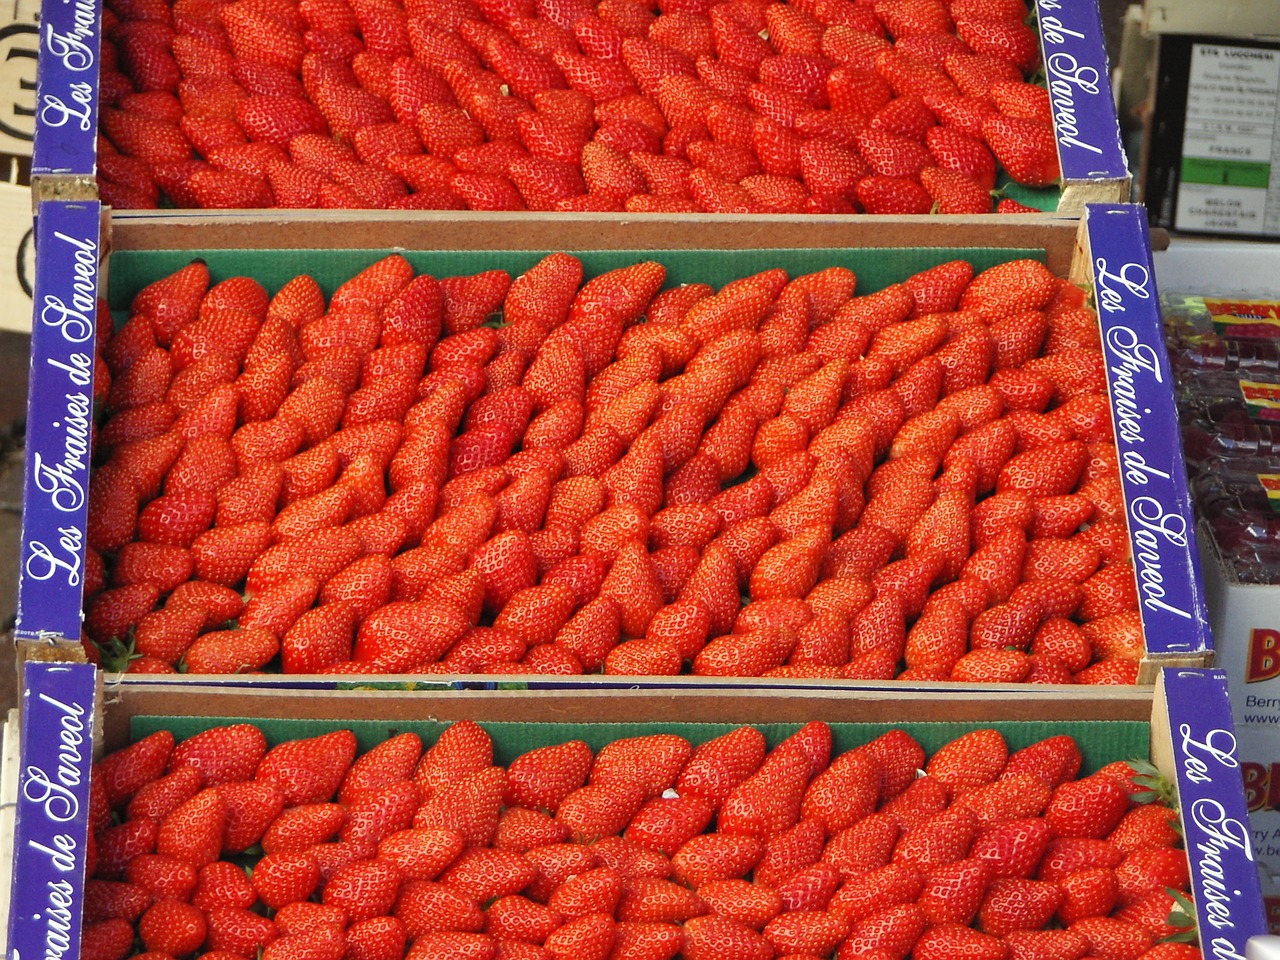 strawberries market red free photo